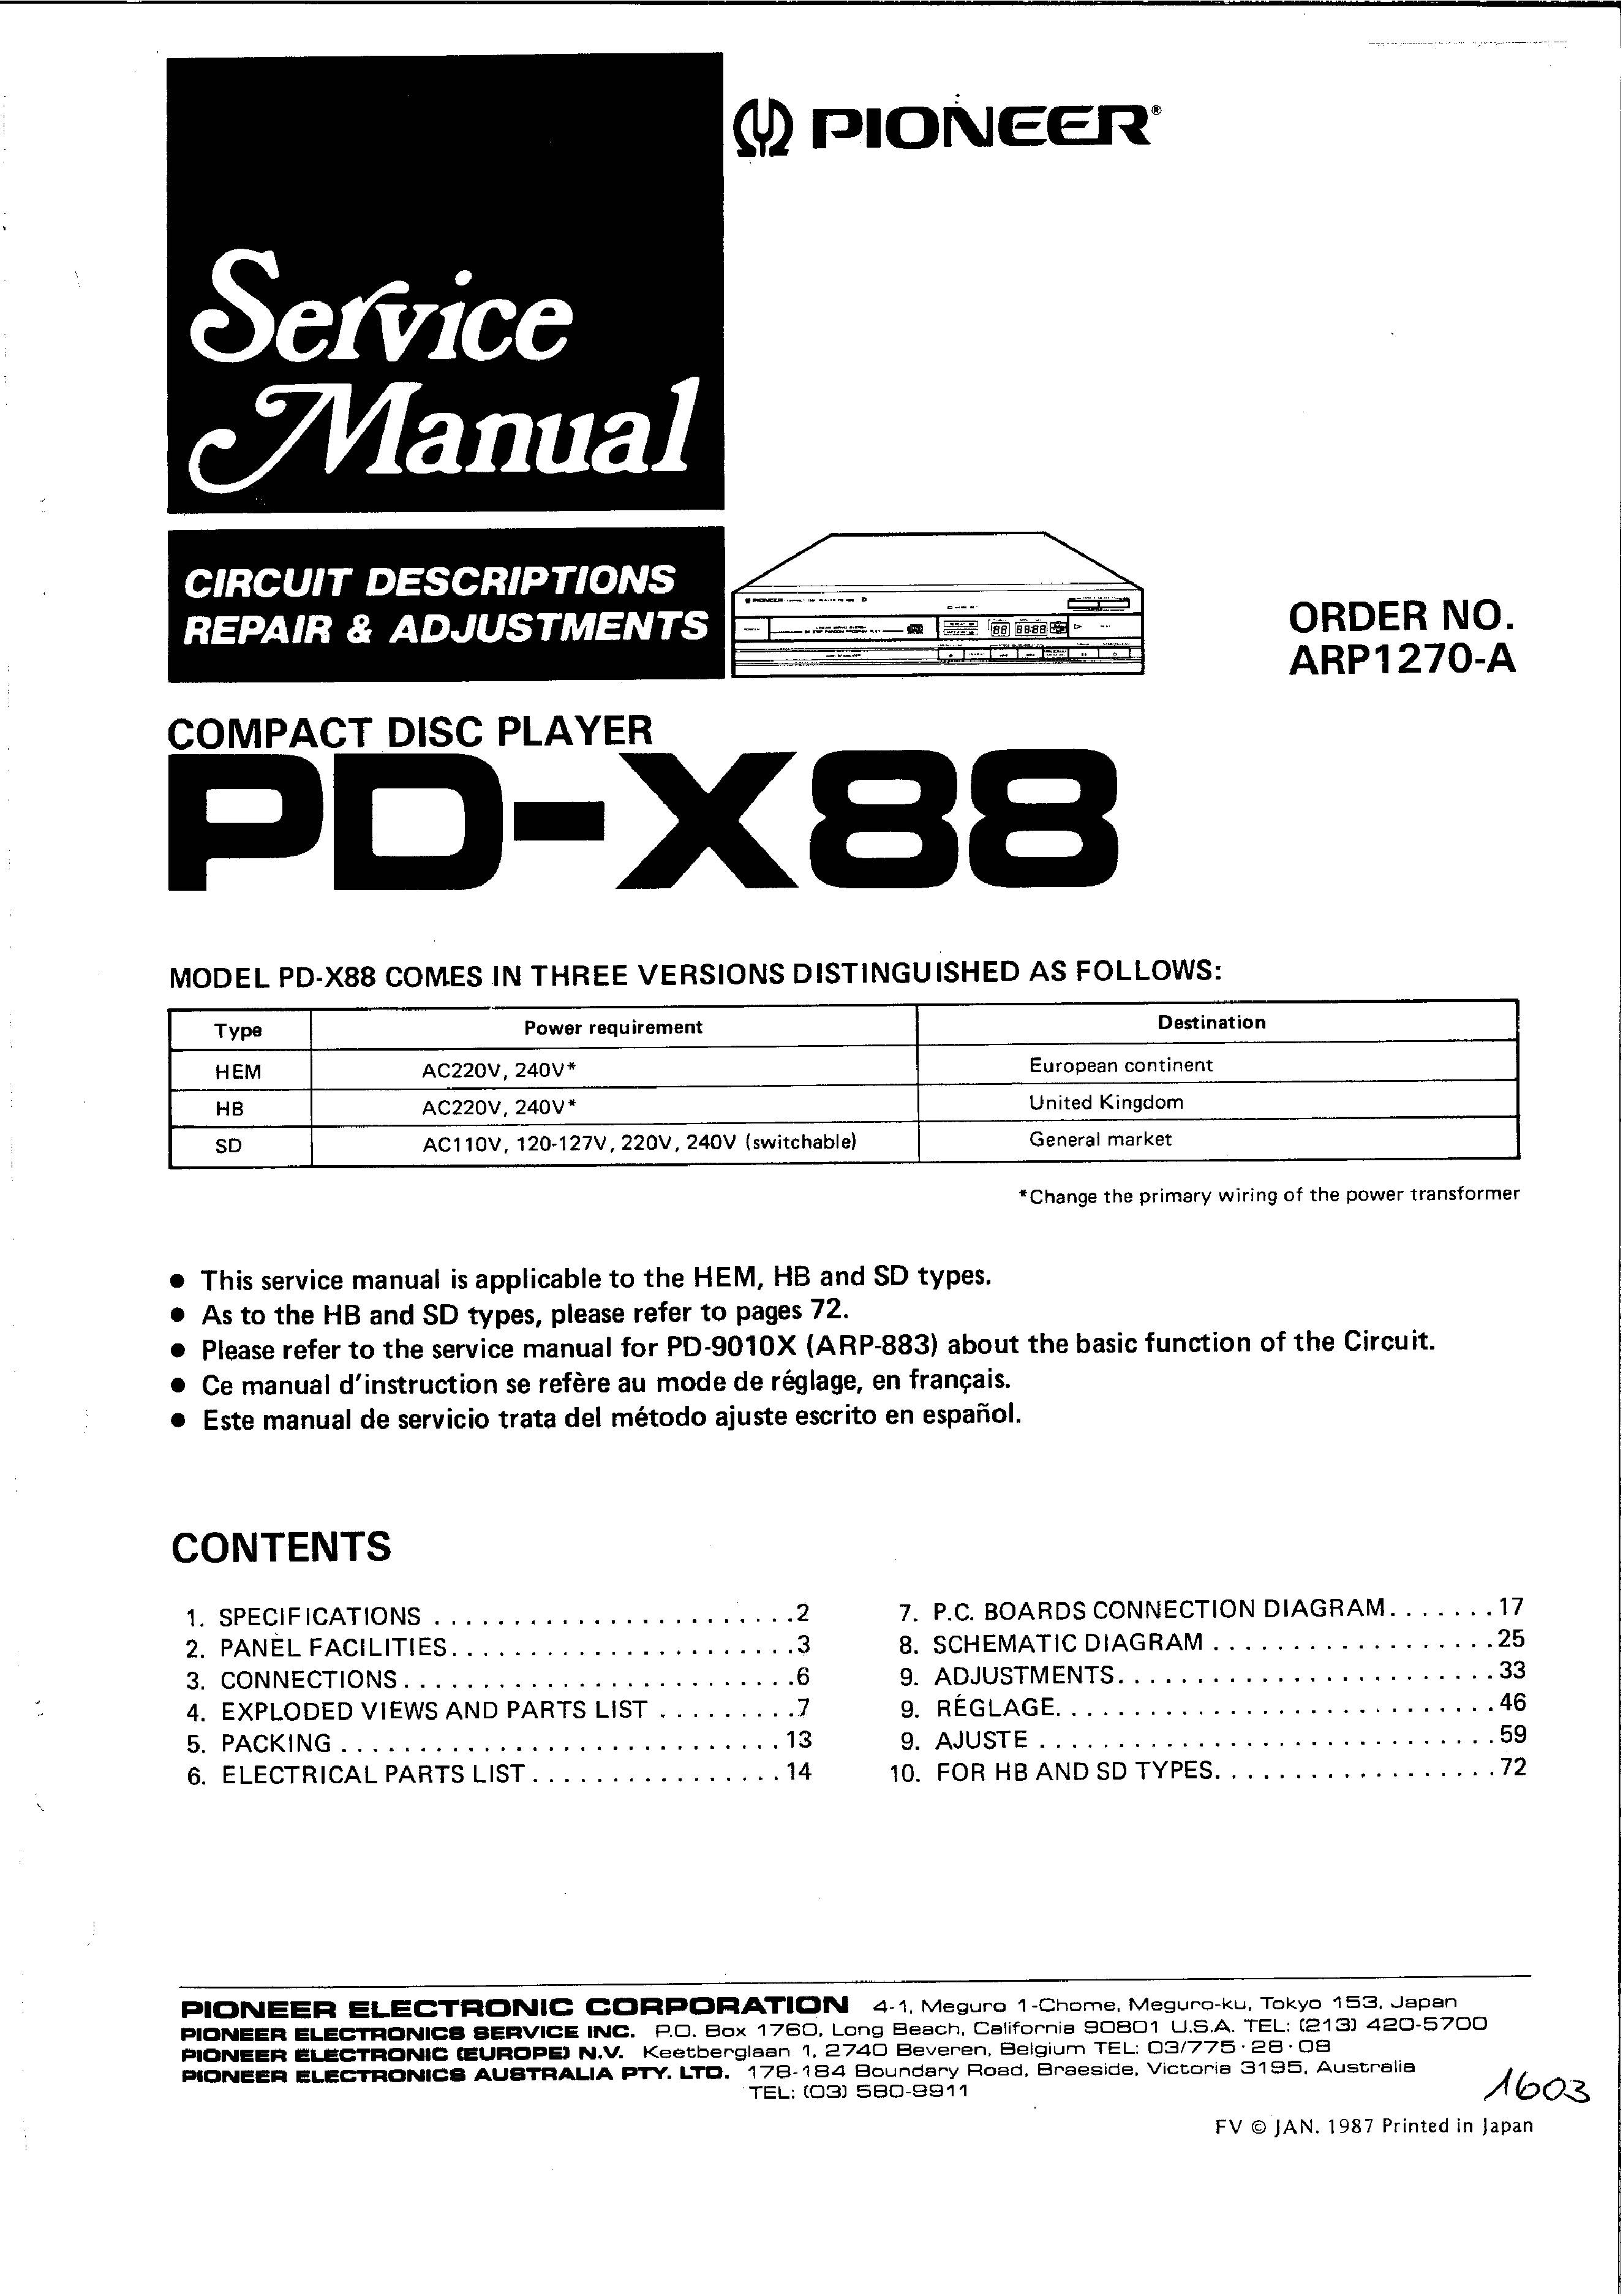 Pioneer PD-X88